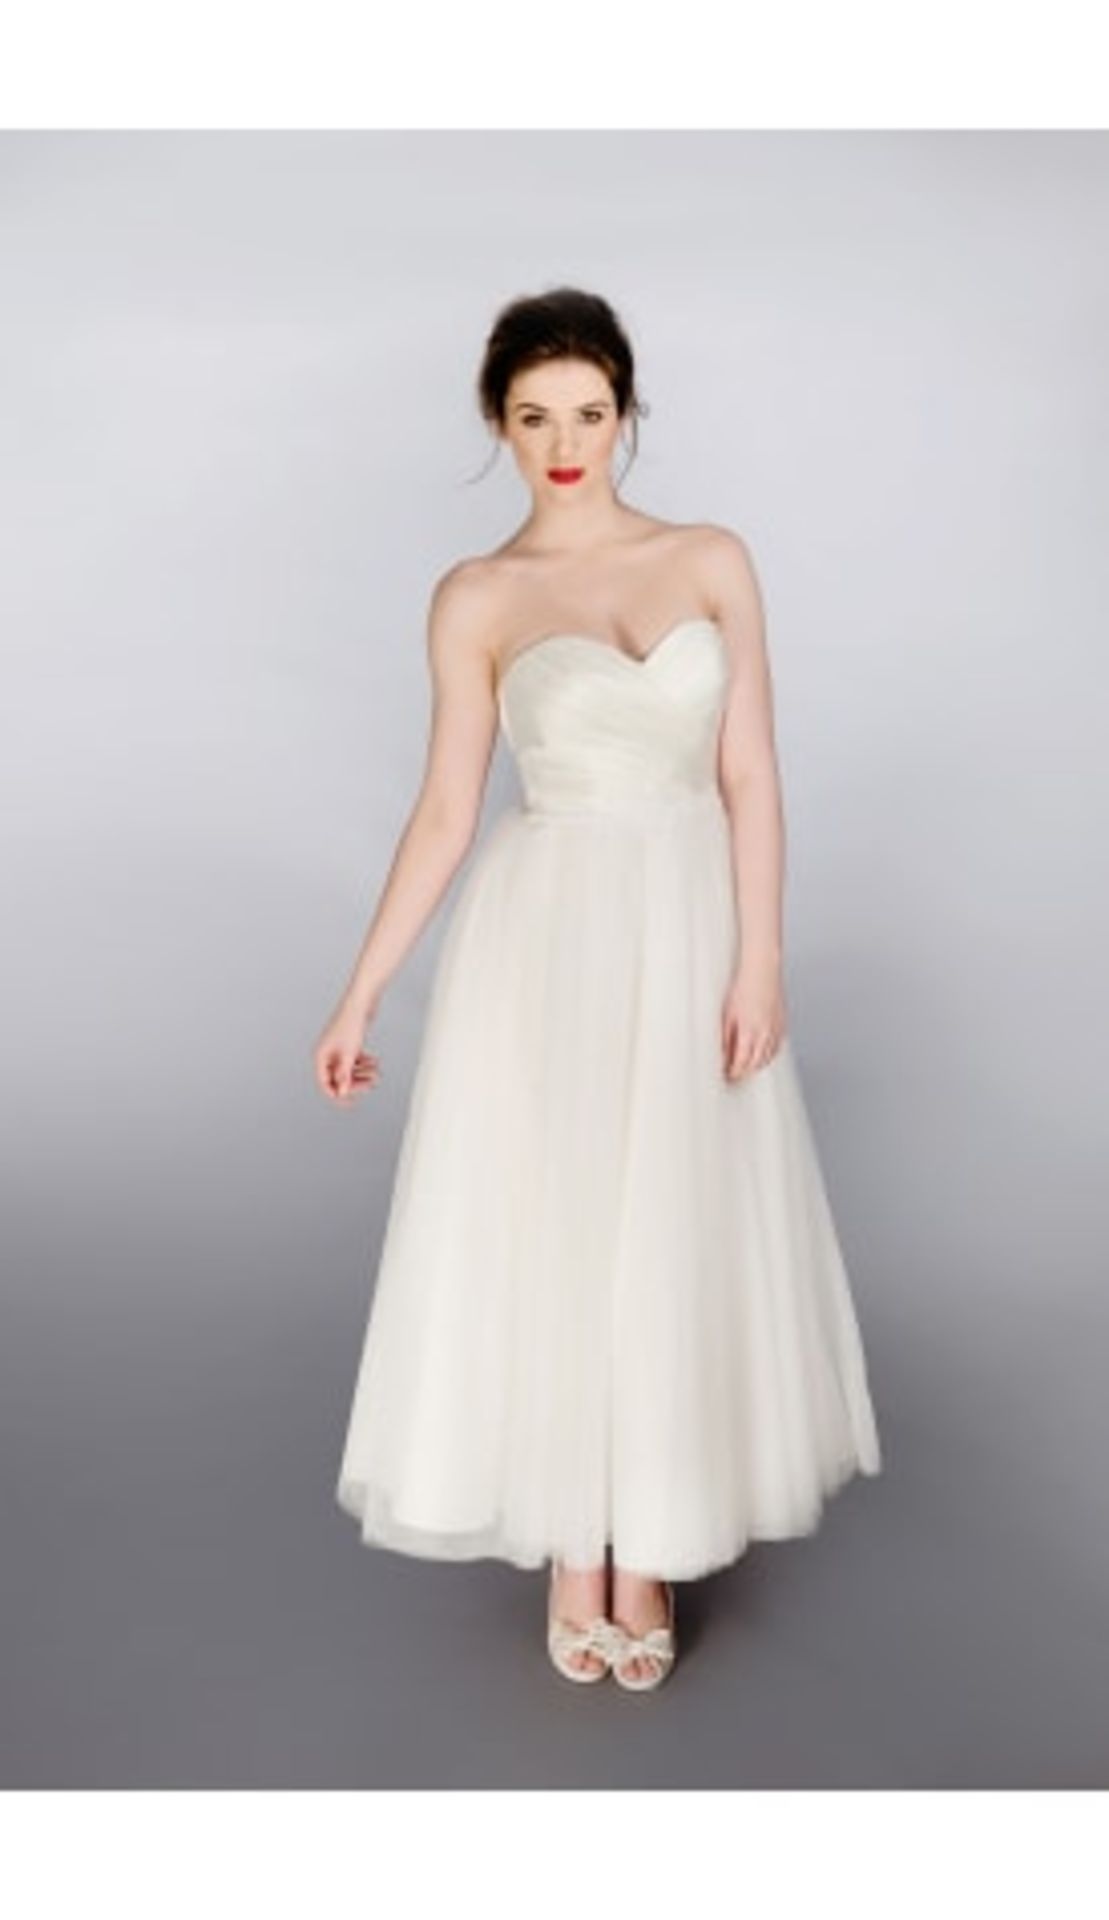 No VAT!! RRP CIRCA £800! Vintage Inspired Designer Wedding Dress in Ivory size 8. Brand New